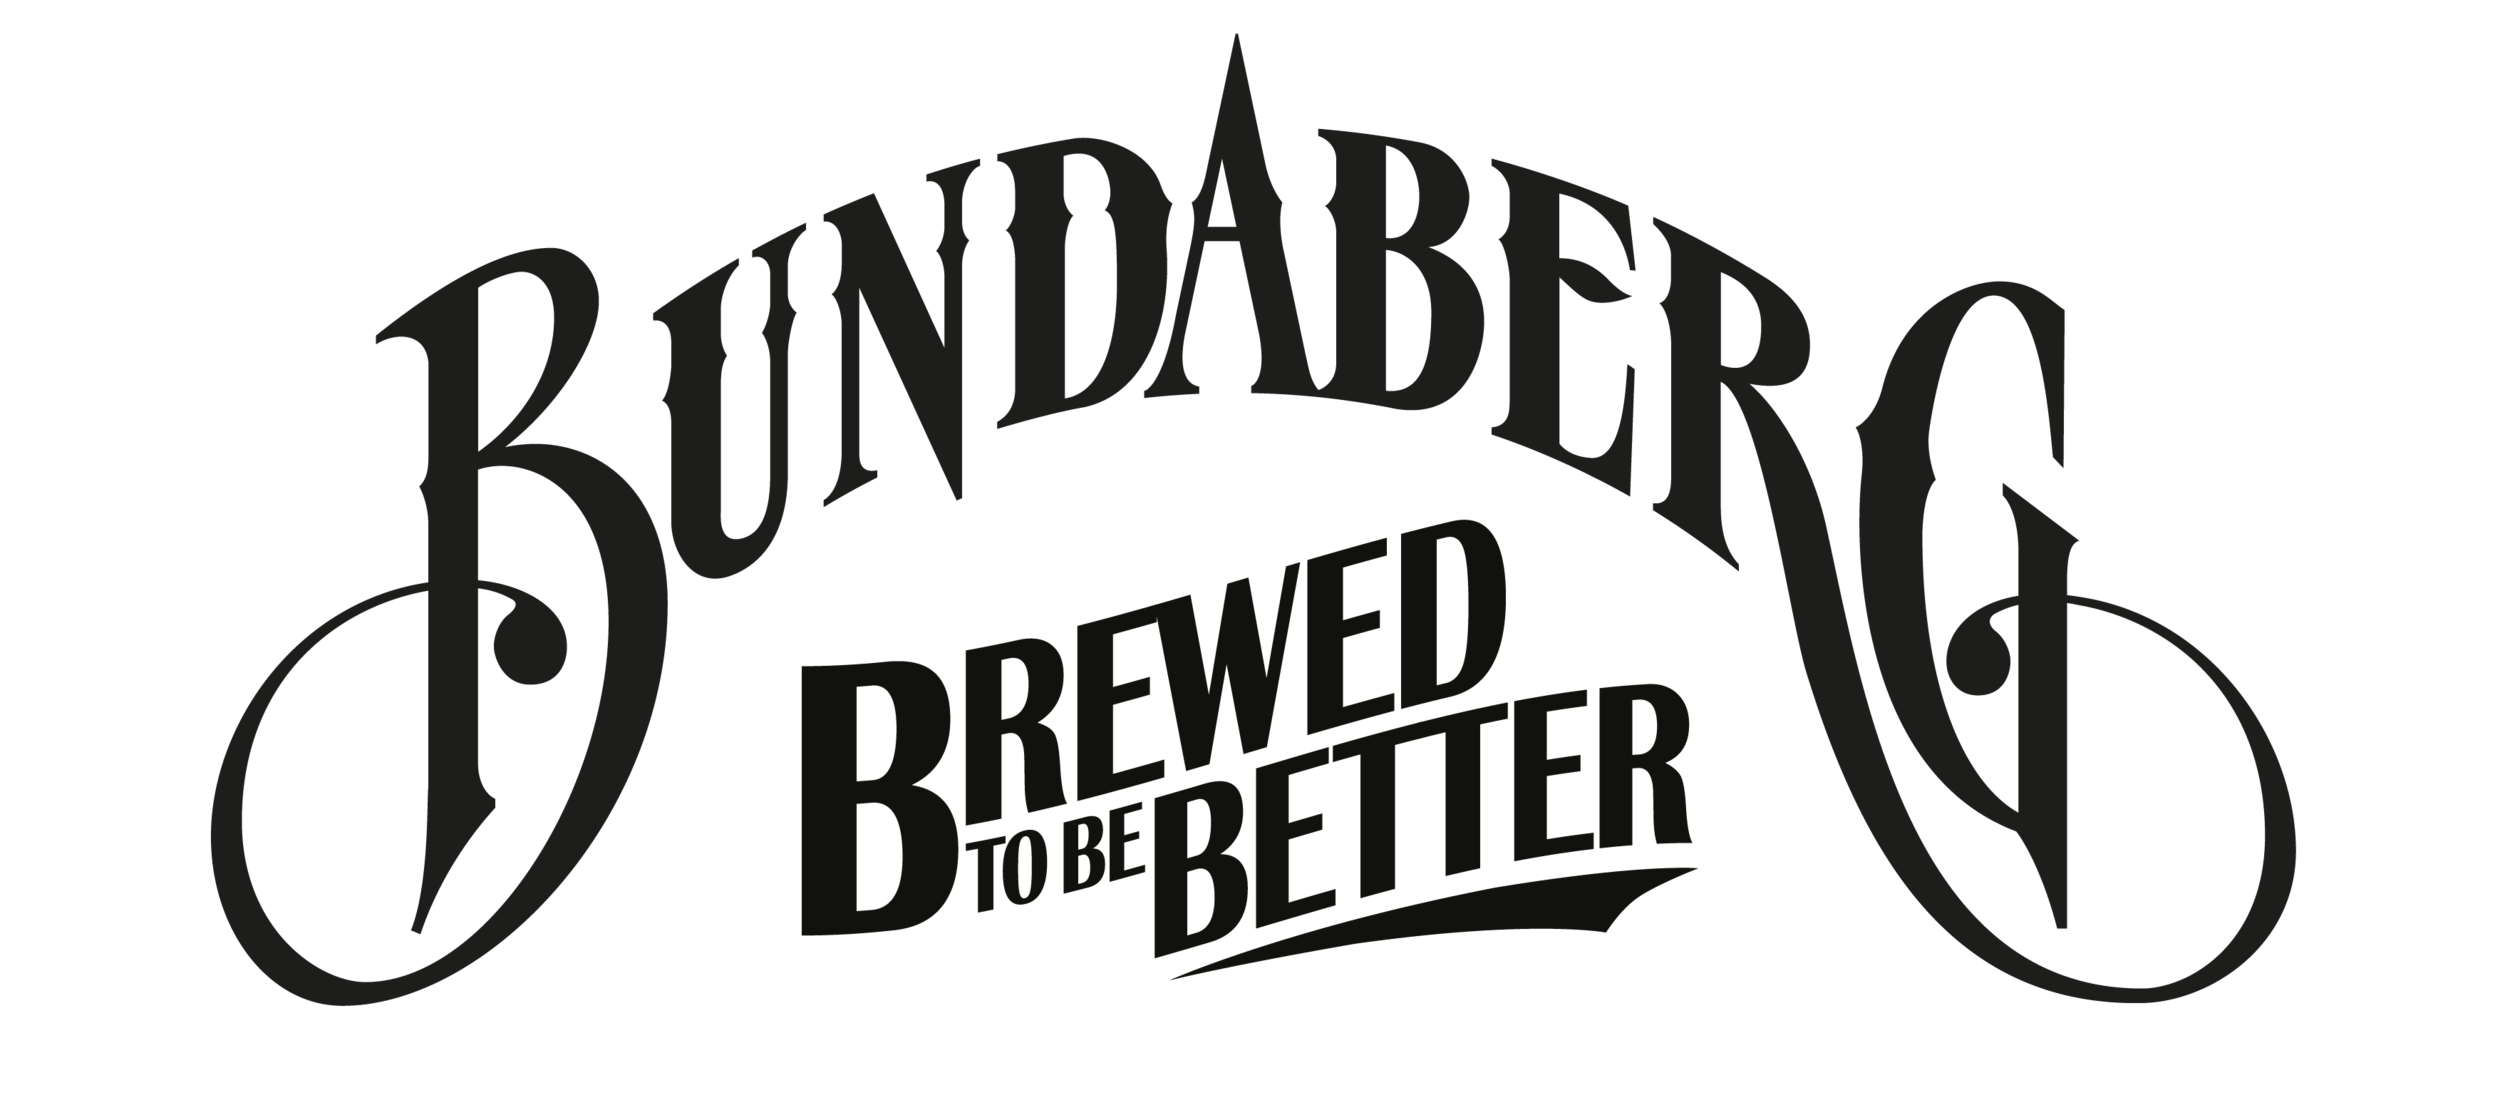 Bundaberg Brewed to be Better Master Logo.png